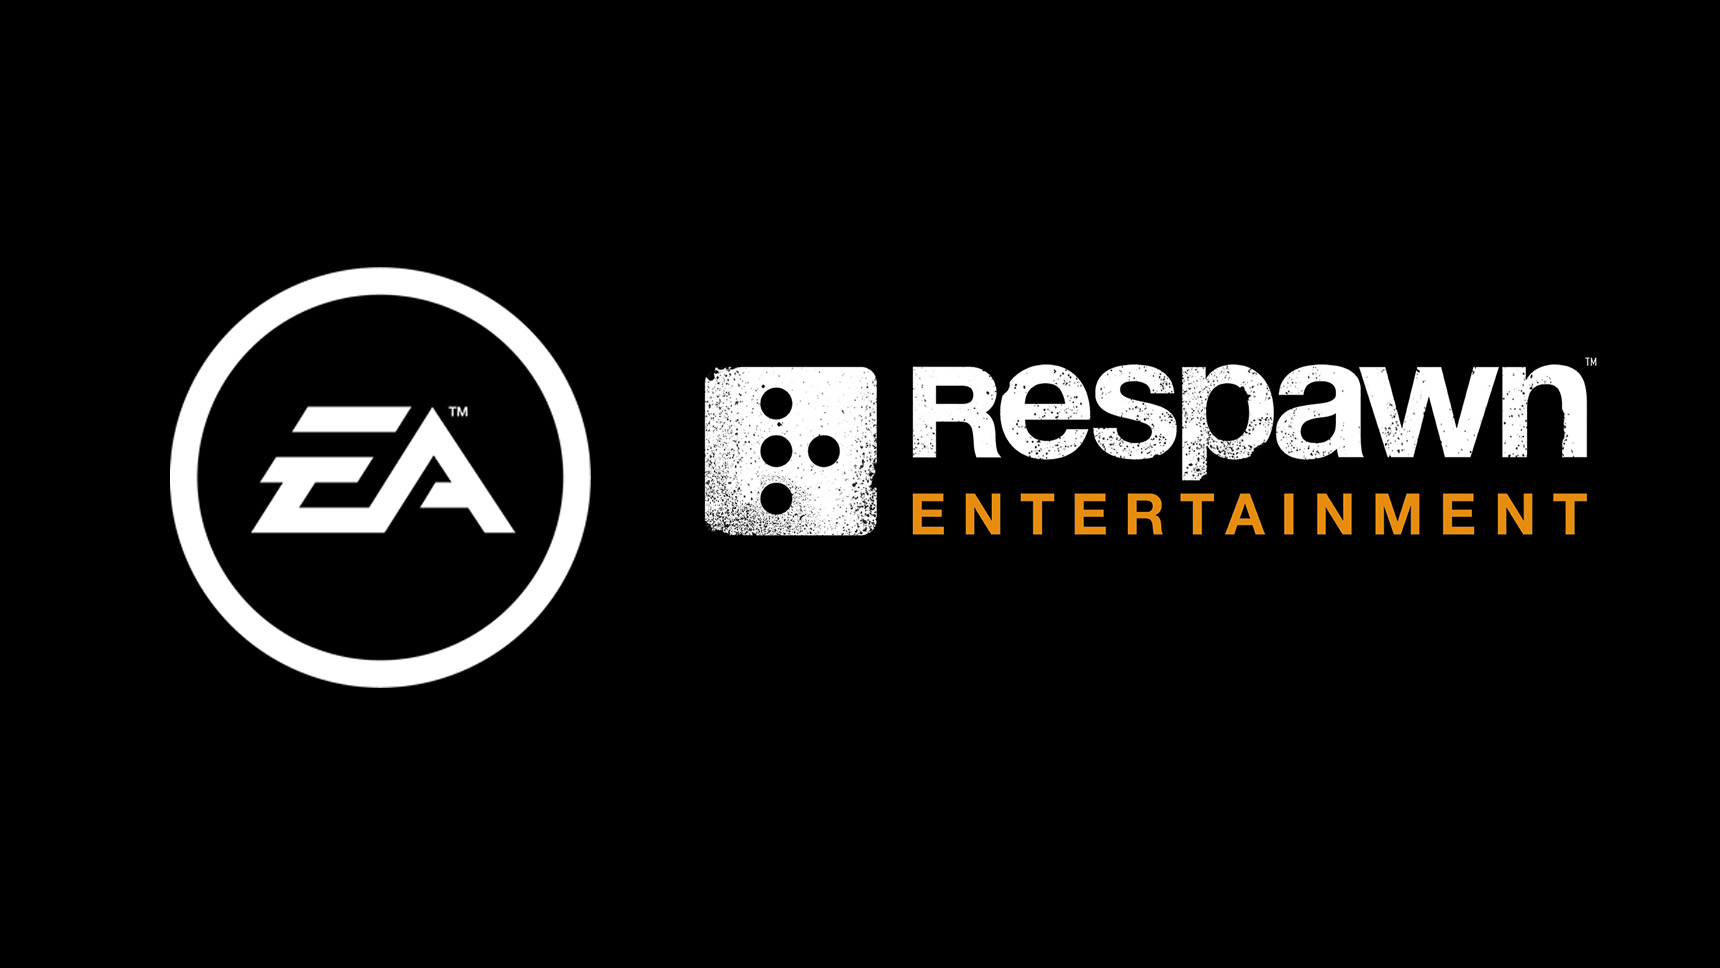 Ardor game respawn. Логотип Respawn. Студия Respawn Entertainment. Логотип респаун Интертеймент. Respawn Entertainment игры.